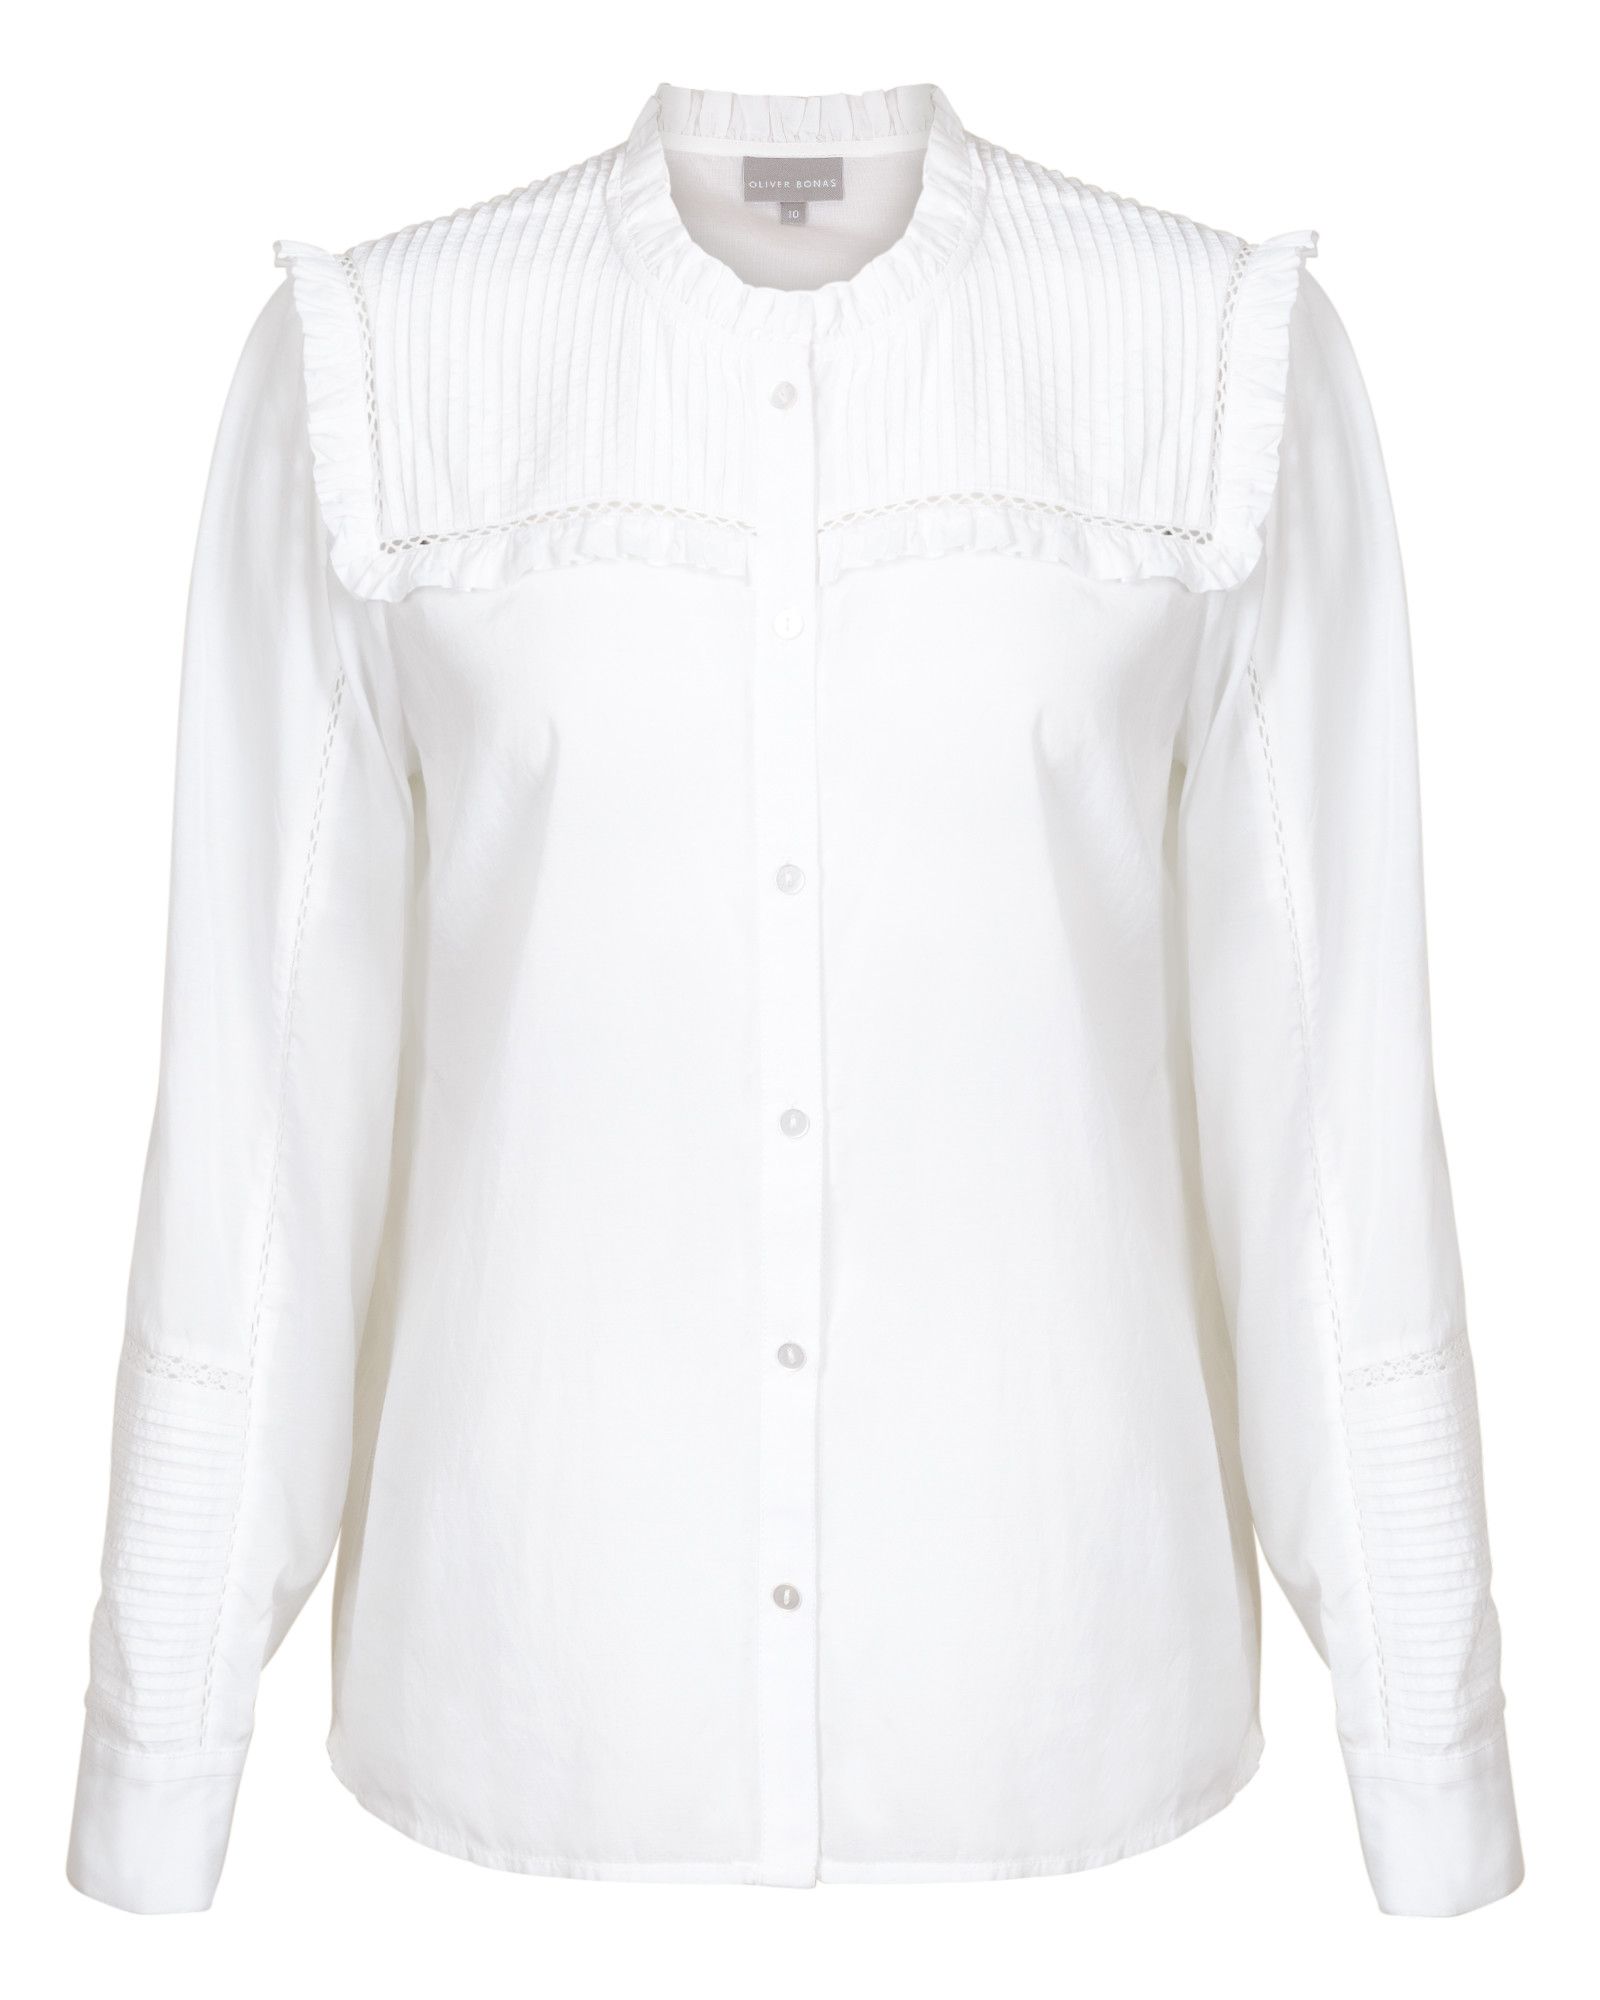 Pintuck & Frill White Shirt | Oliver Bonas